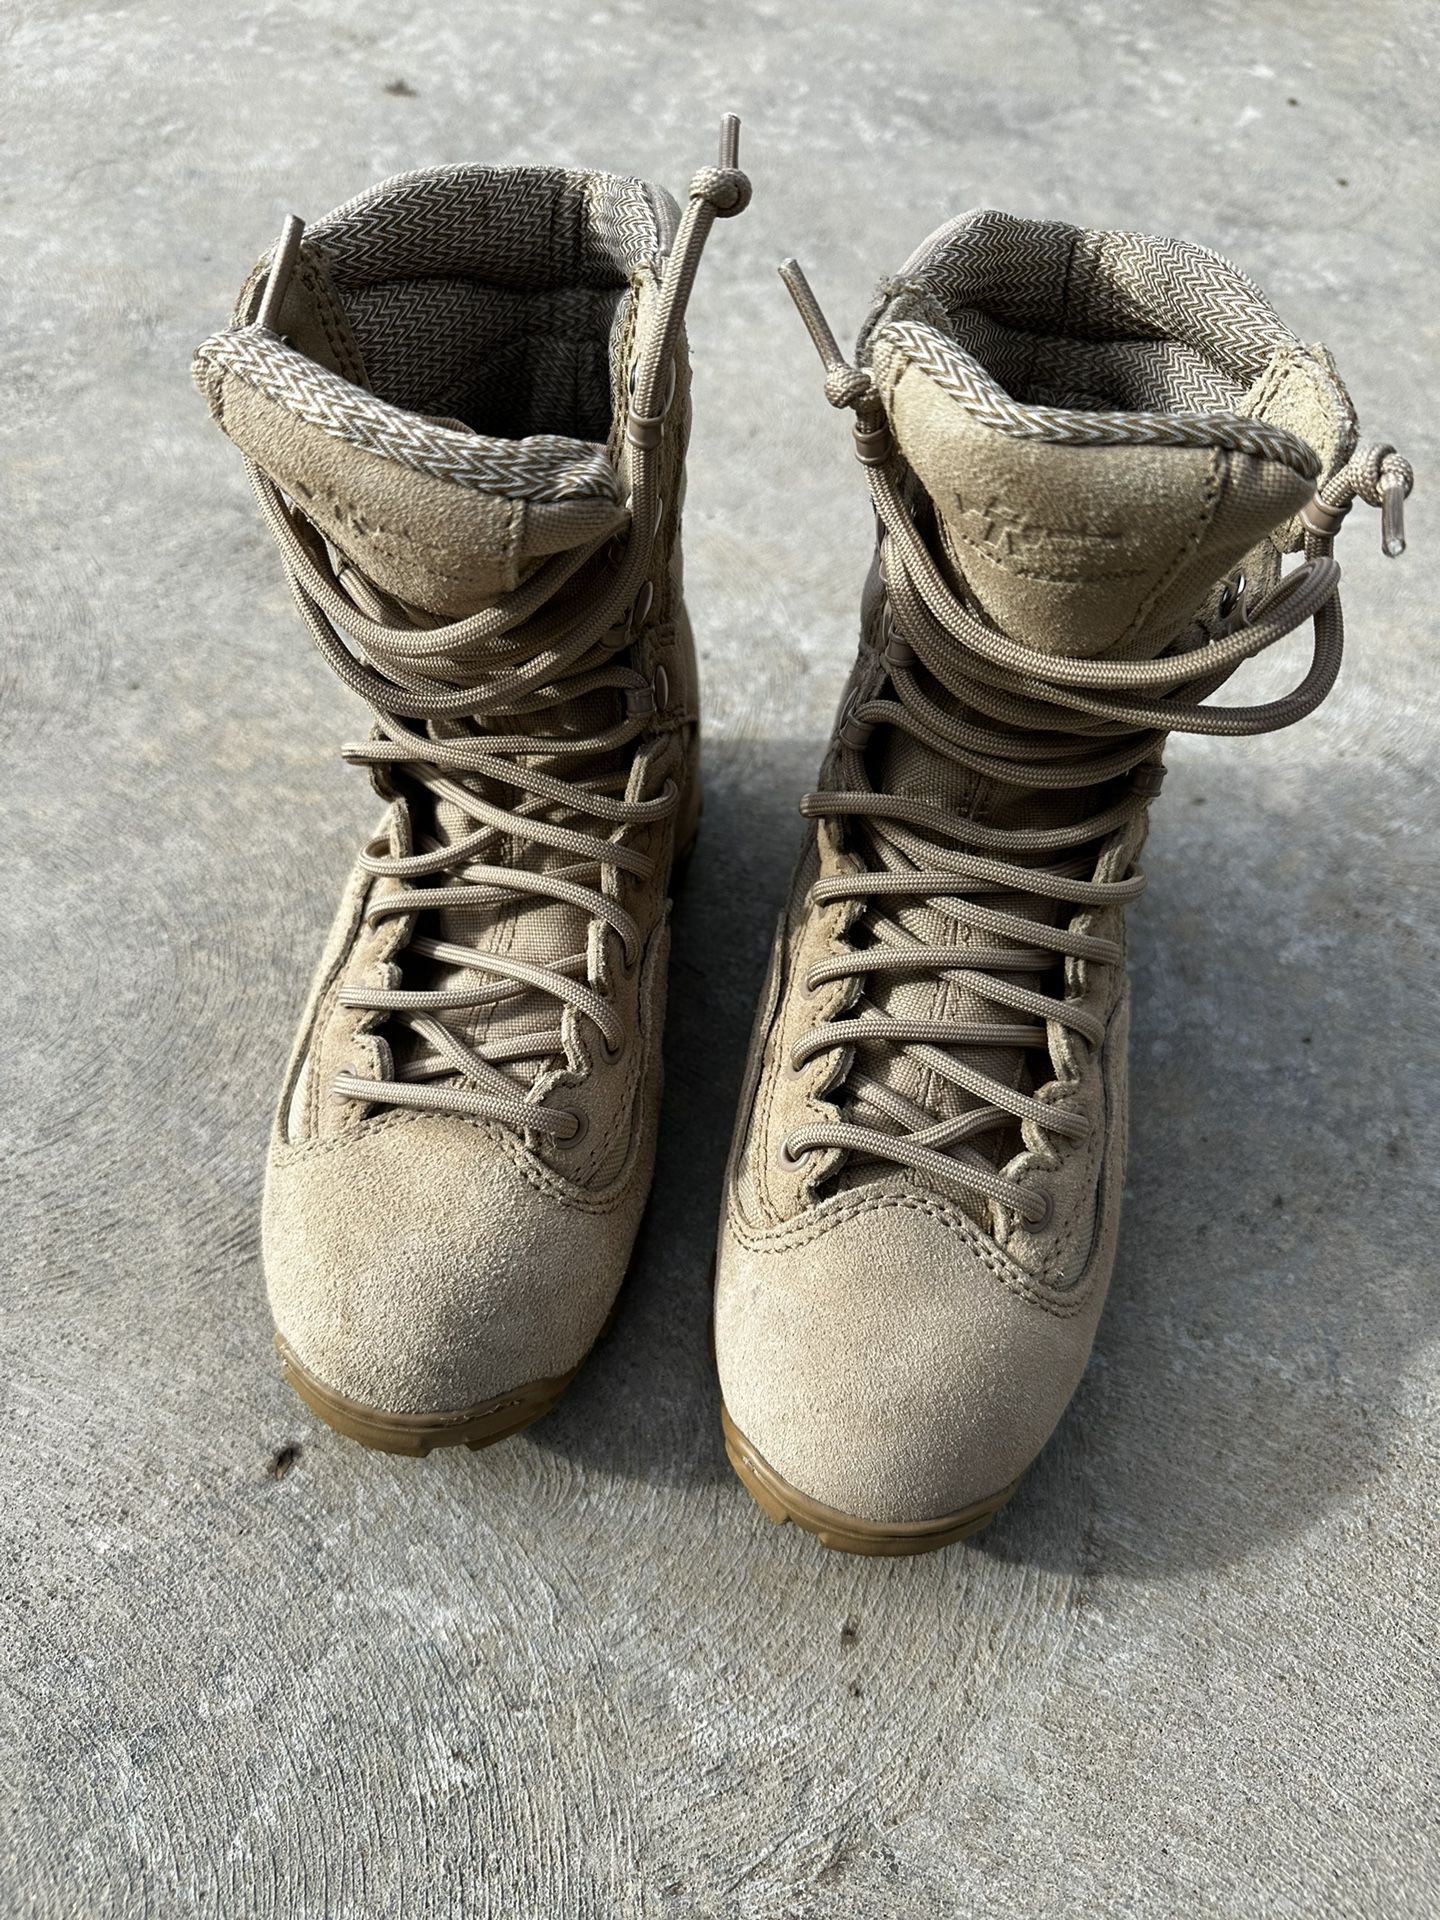 Military Uniform  Boots 